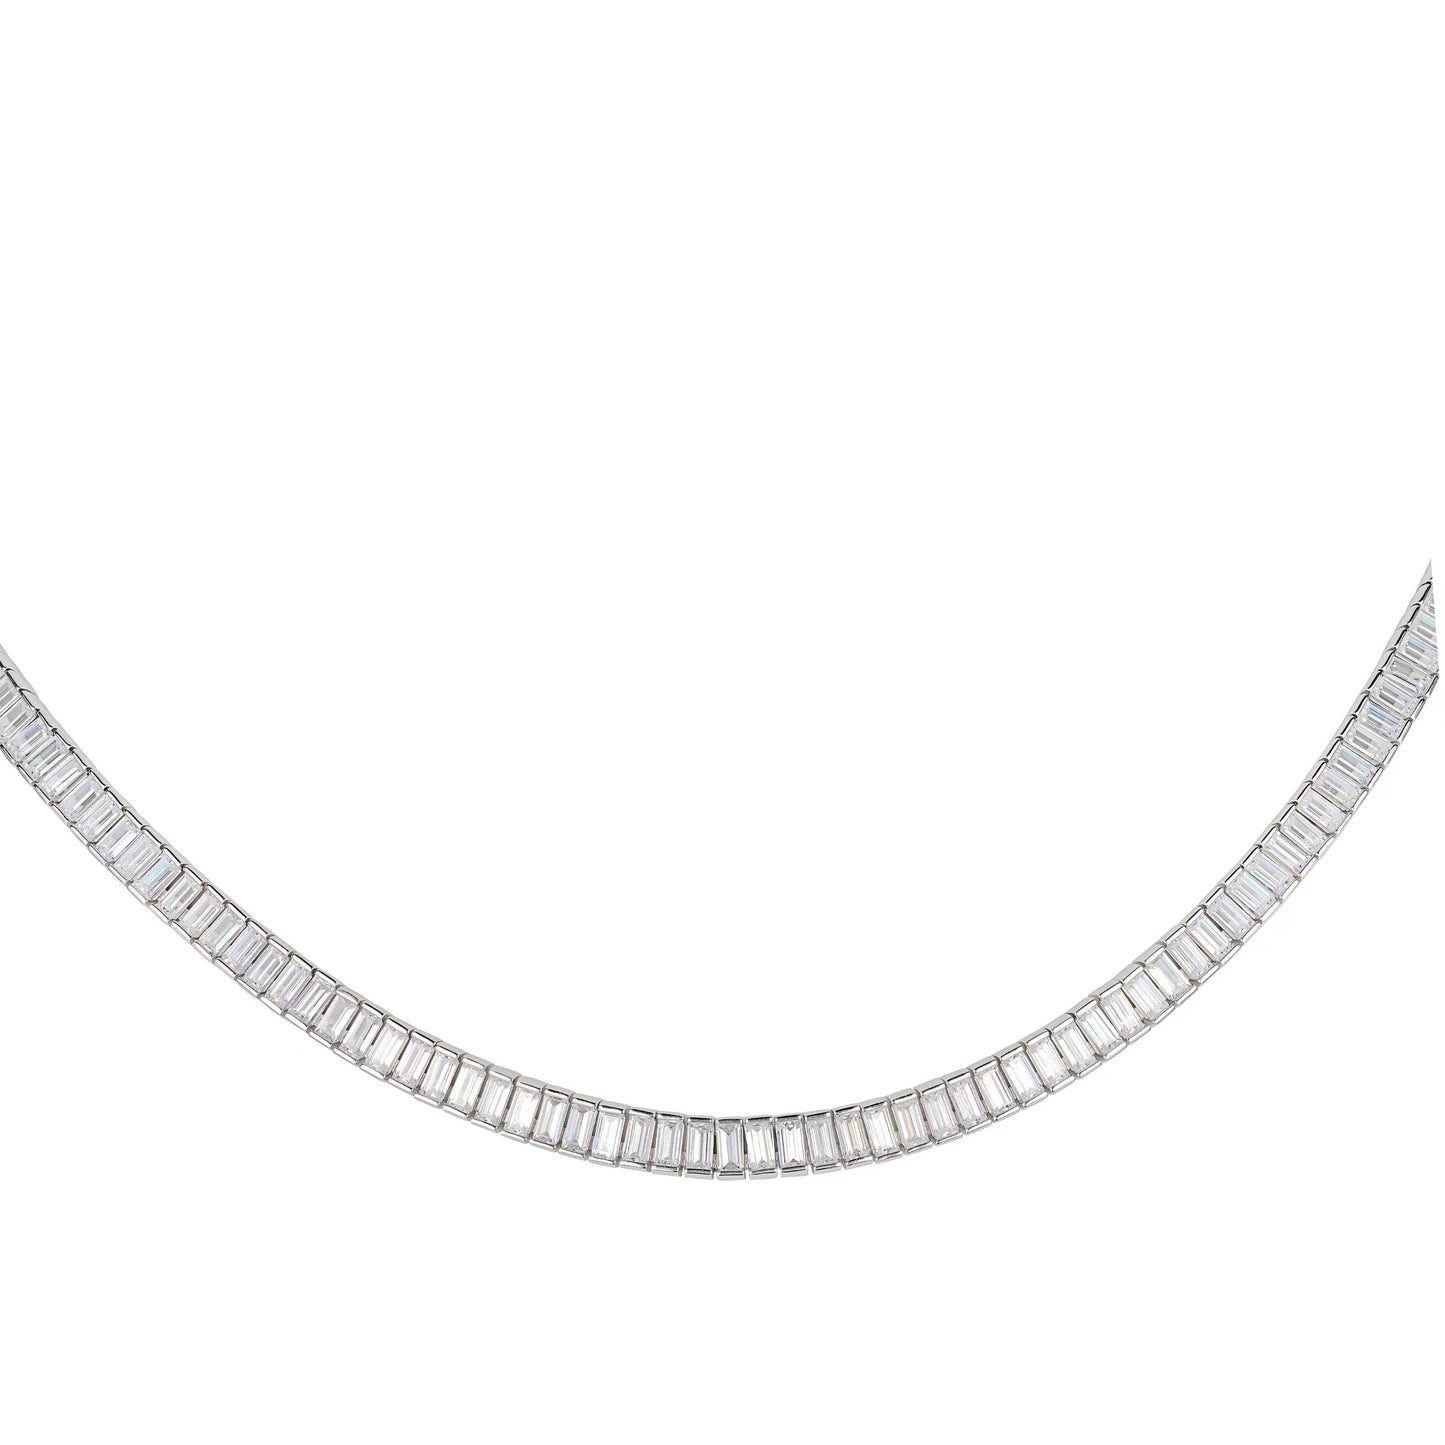 Bespoke customized design: Emerald-cut tennis necklace